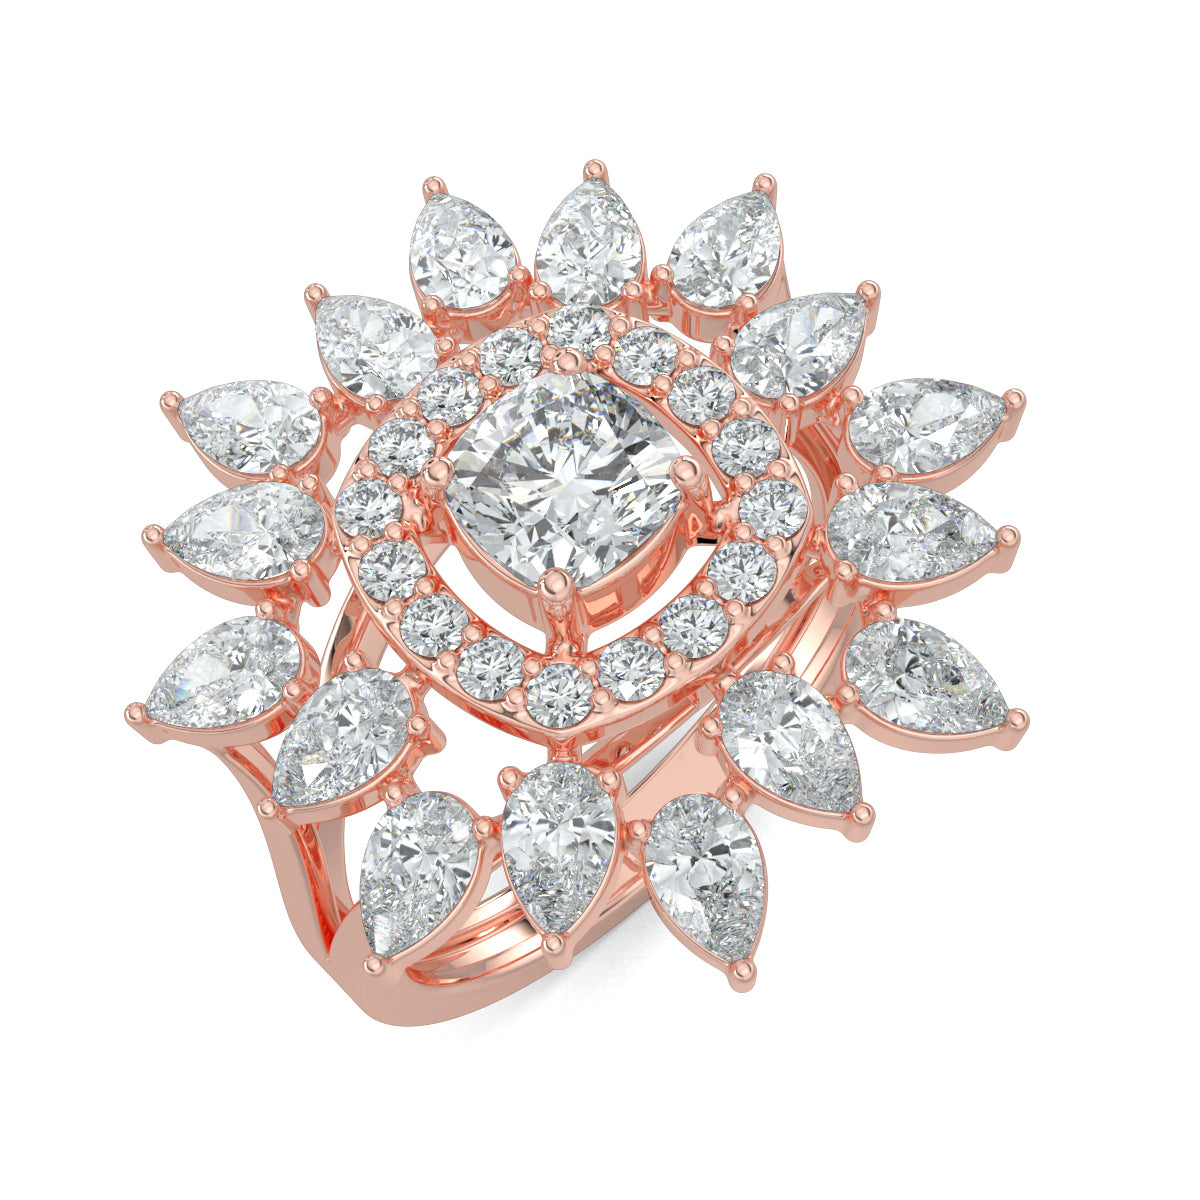 Rose Gold, Diamond Ring, Natural Diamond Ring, Lab-Grown Diamond Ring, Cushion Square Diamond, Halo Setting, Pear Diamonds, Celestial Jewelry, Ethical Luxury, Everyday Ring